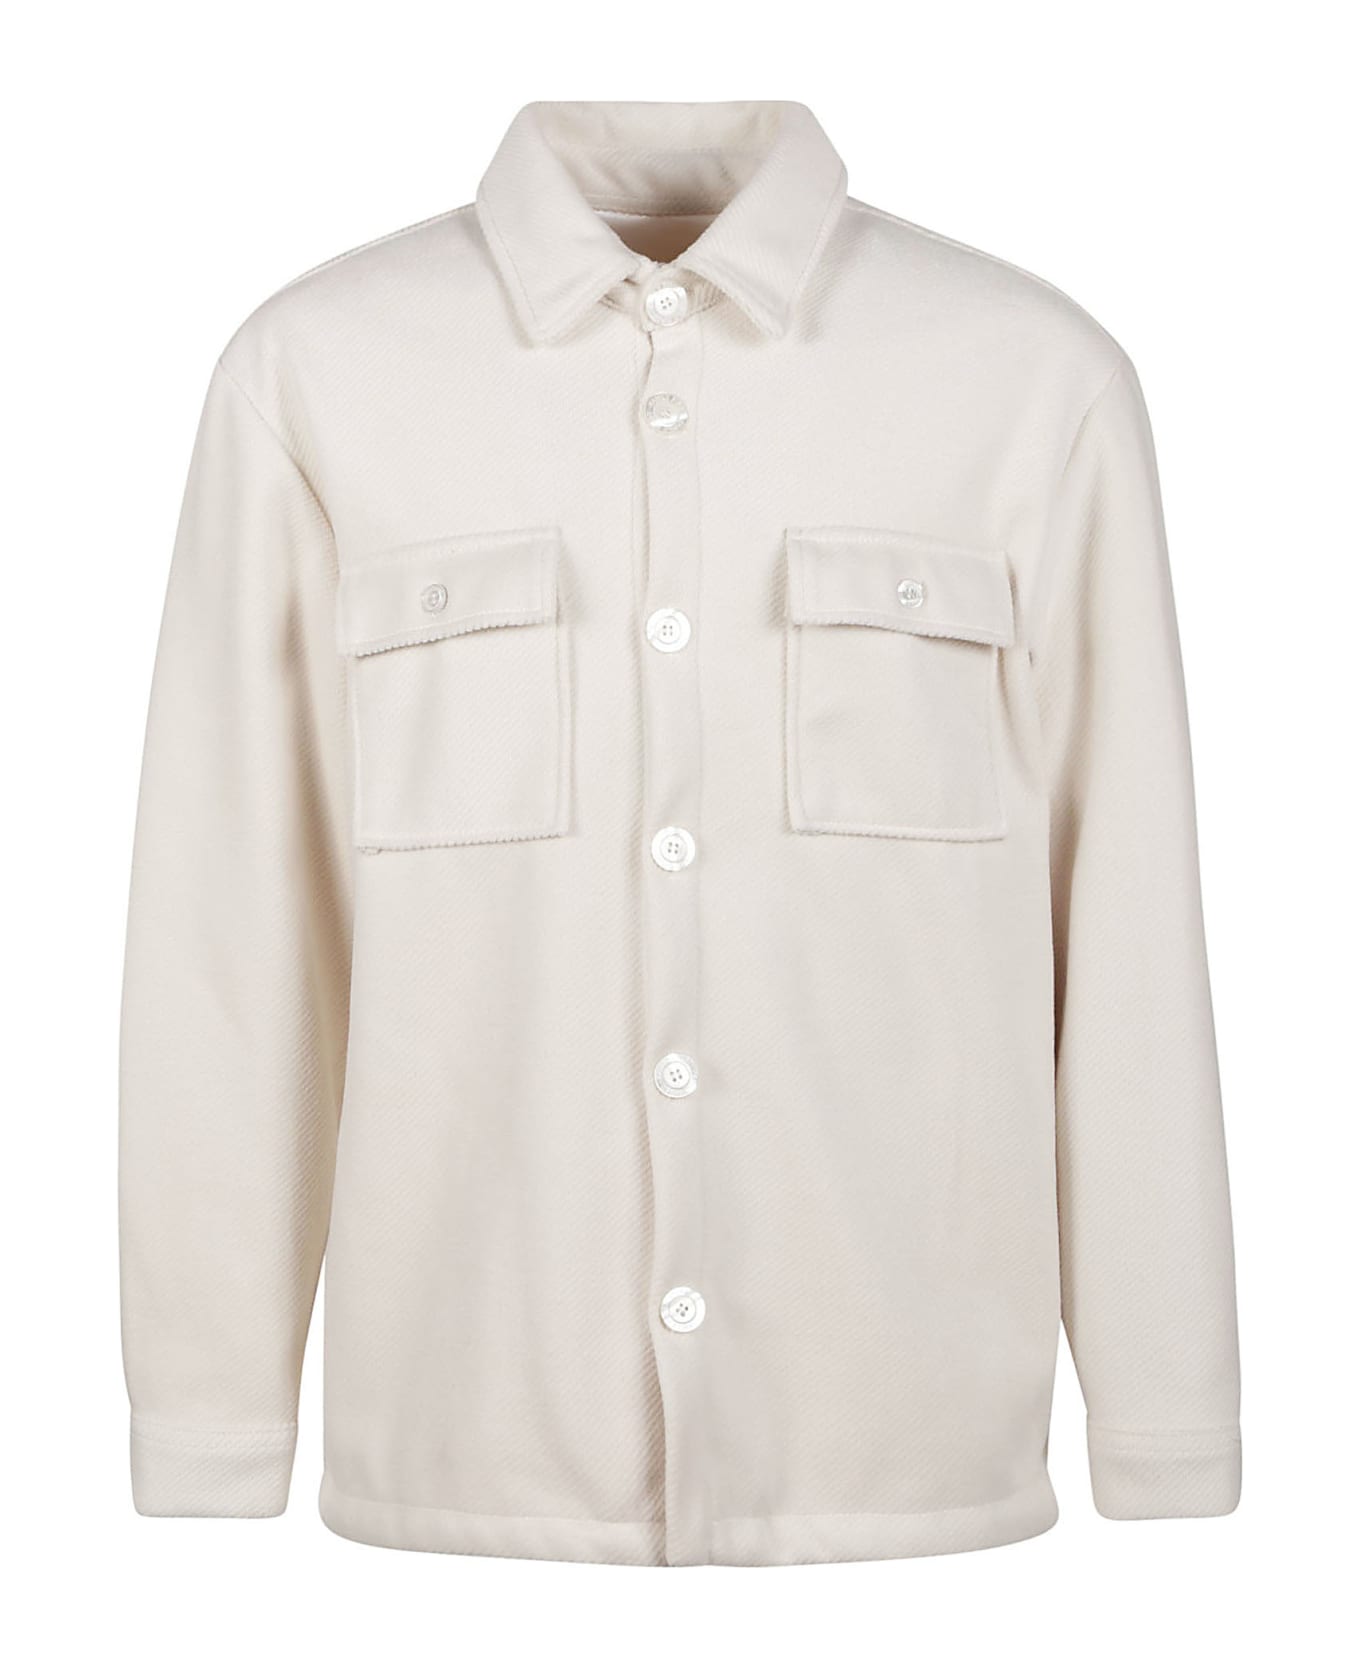 Family First Milano Shirt Jacket - WHITE